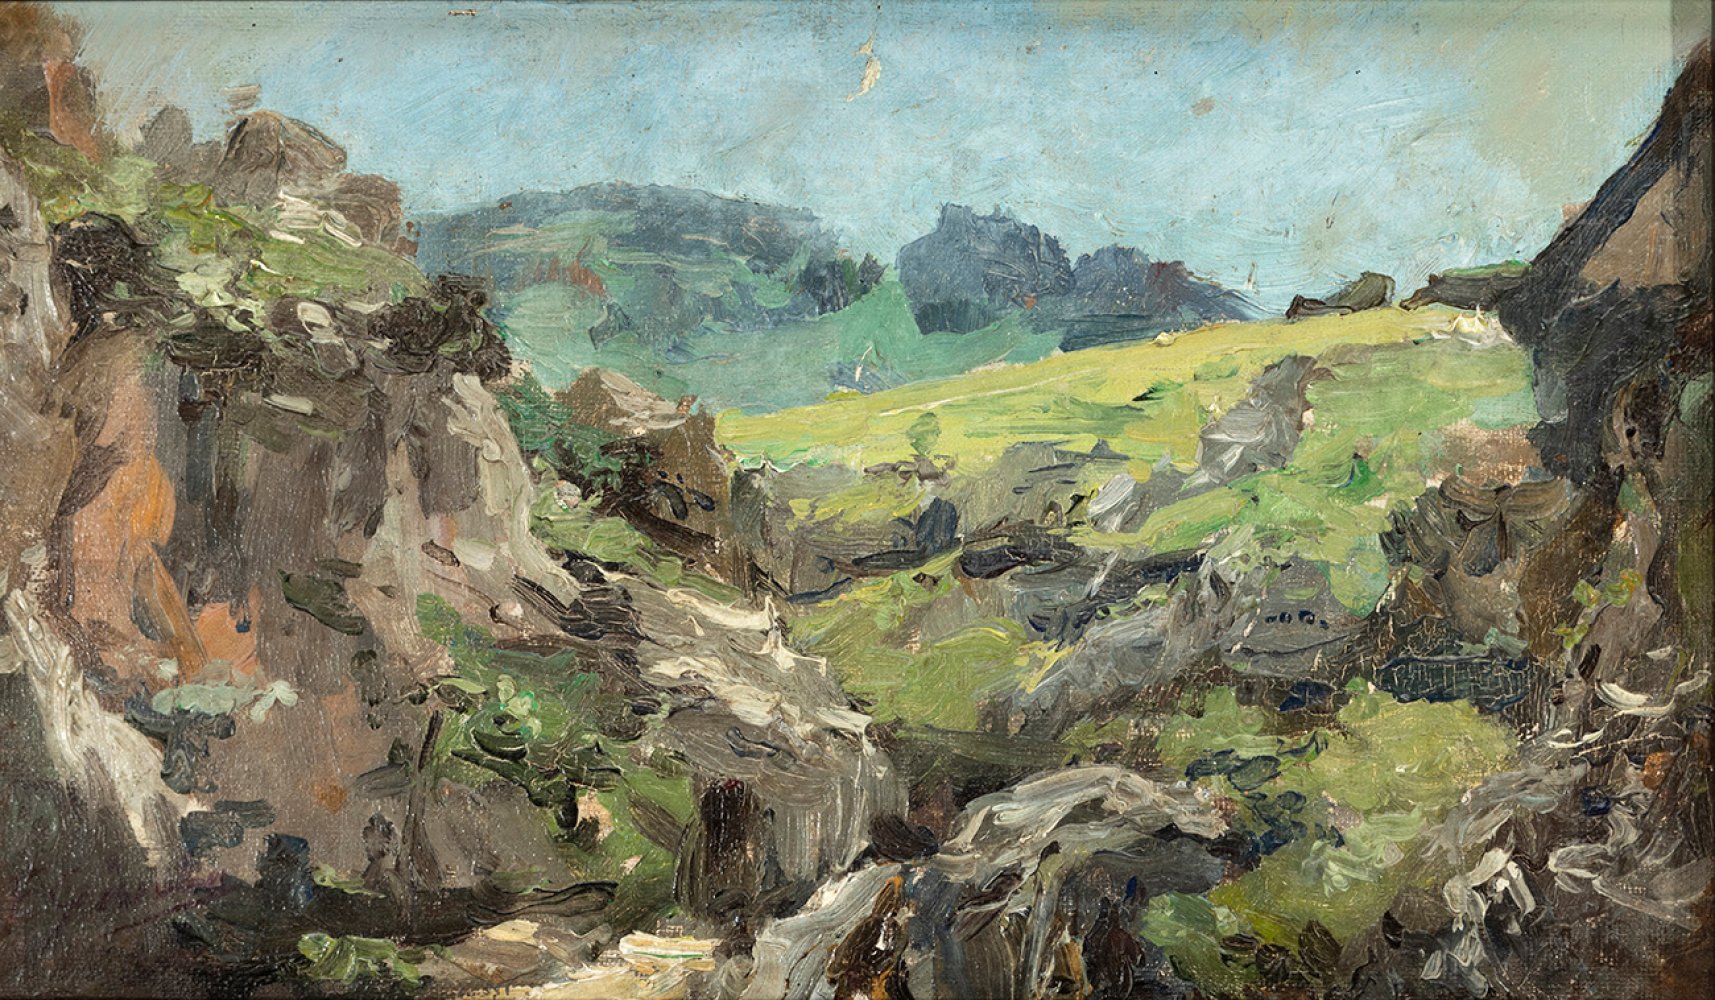 FRANCESC GIMENO I ARASA, (Tortosa, Tarragona, 1858 - Barcelona, 1927)."Mountain landscape".Oil on